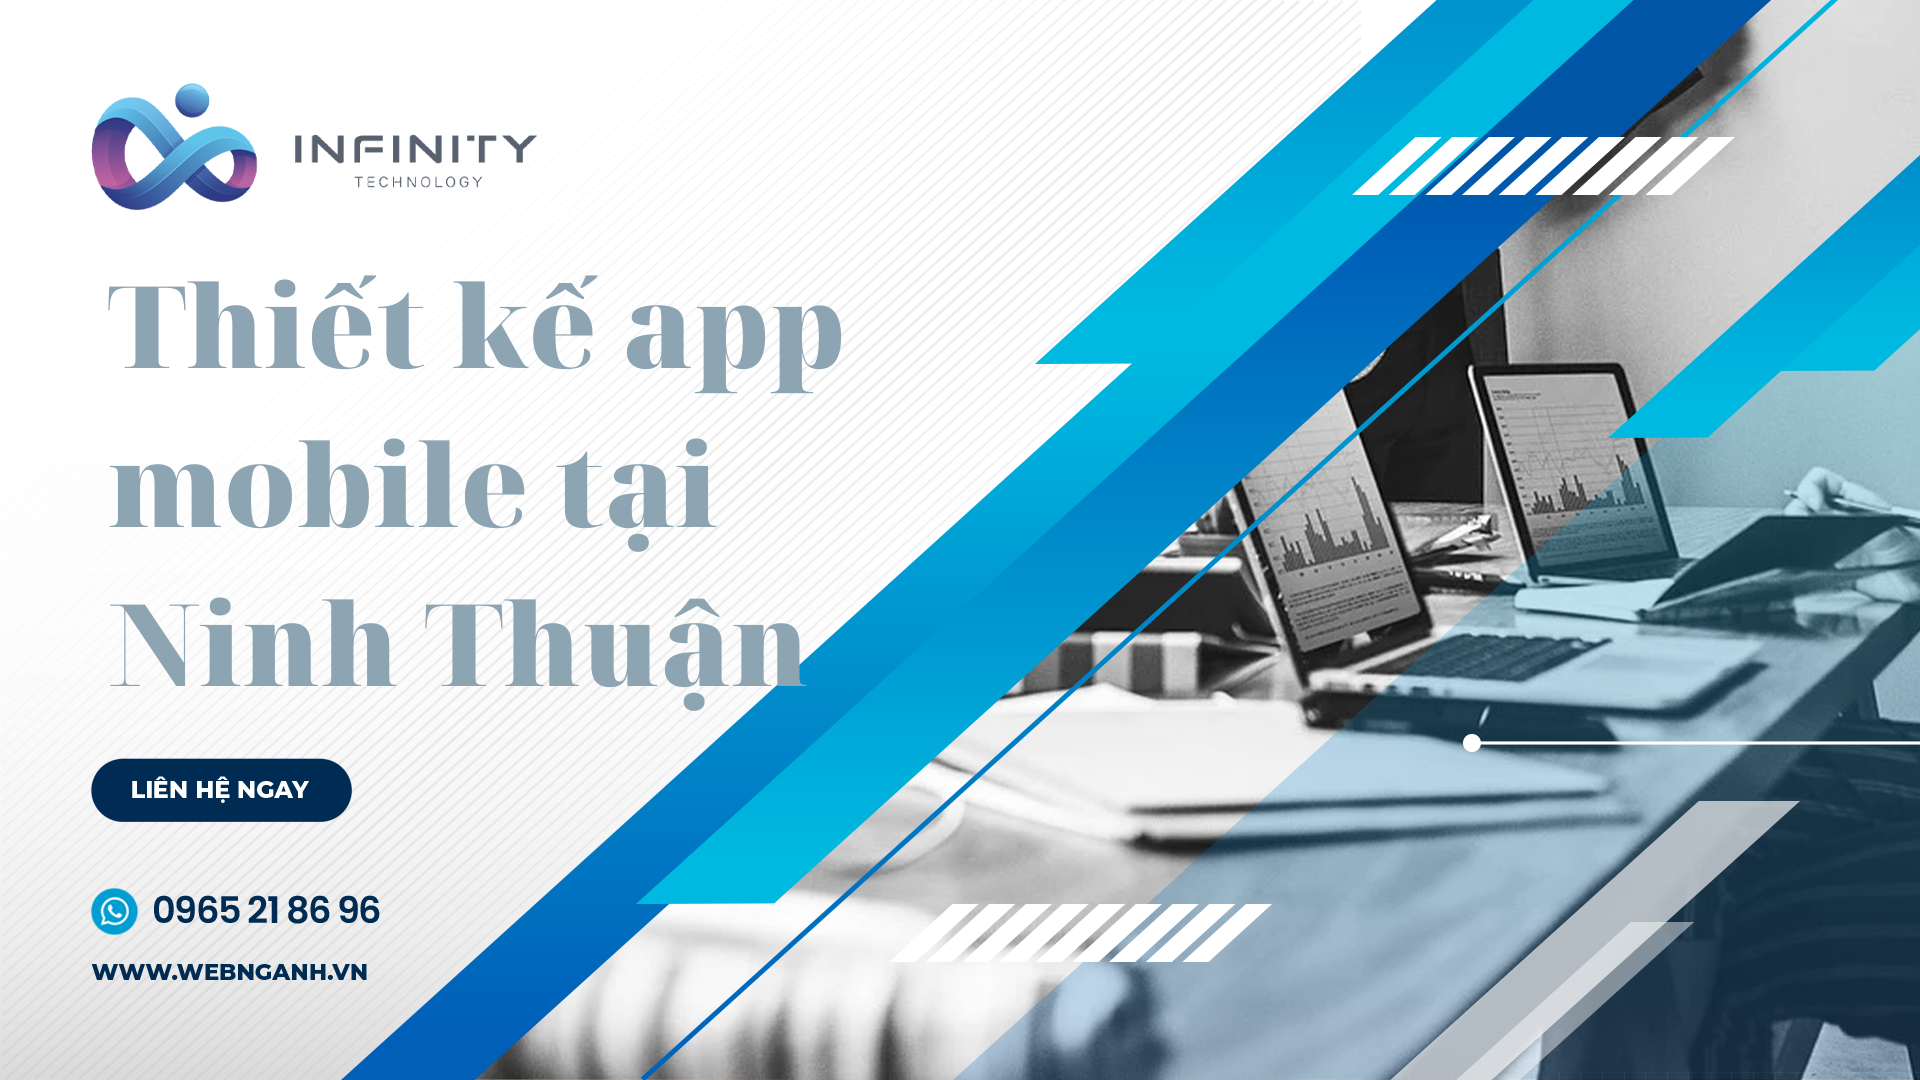 Thiết kế app mobile tại Ninh Thuận